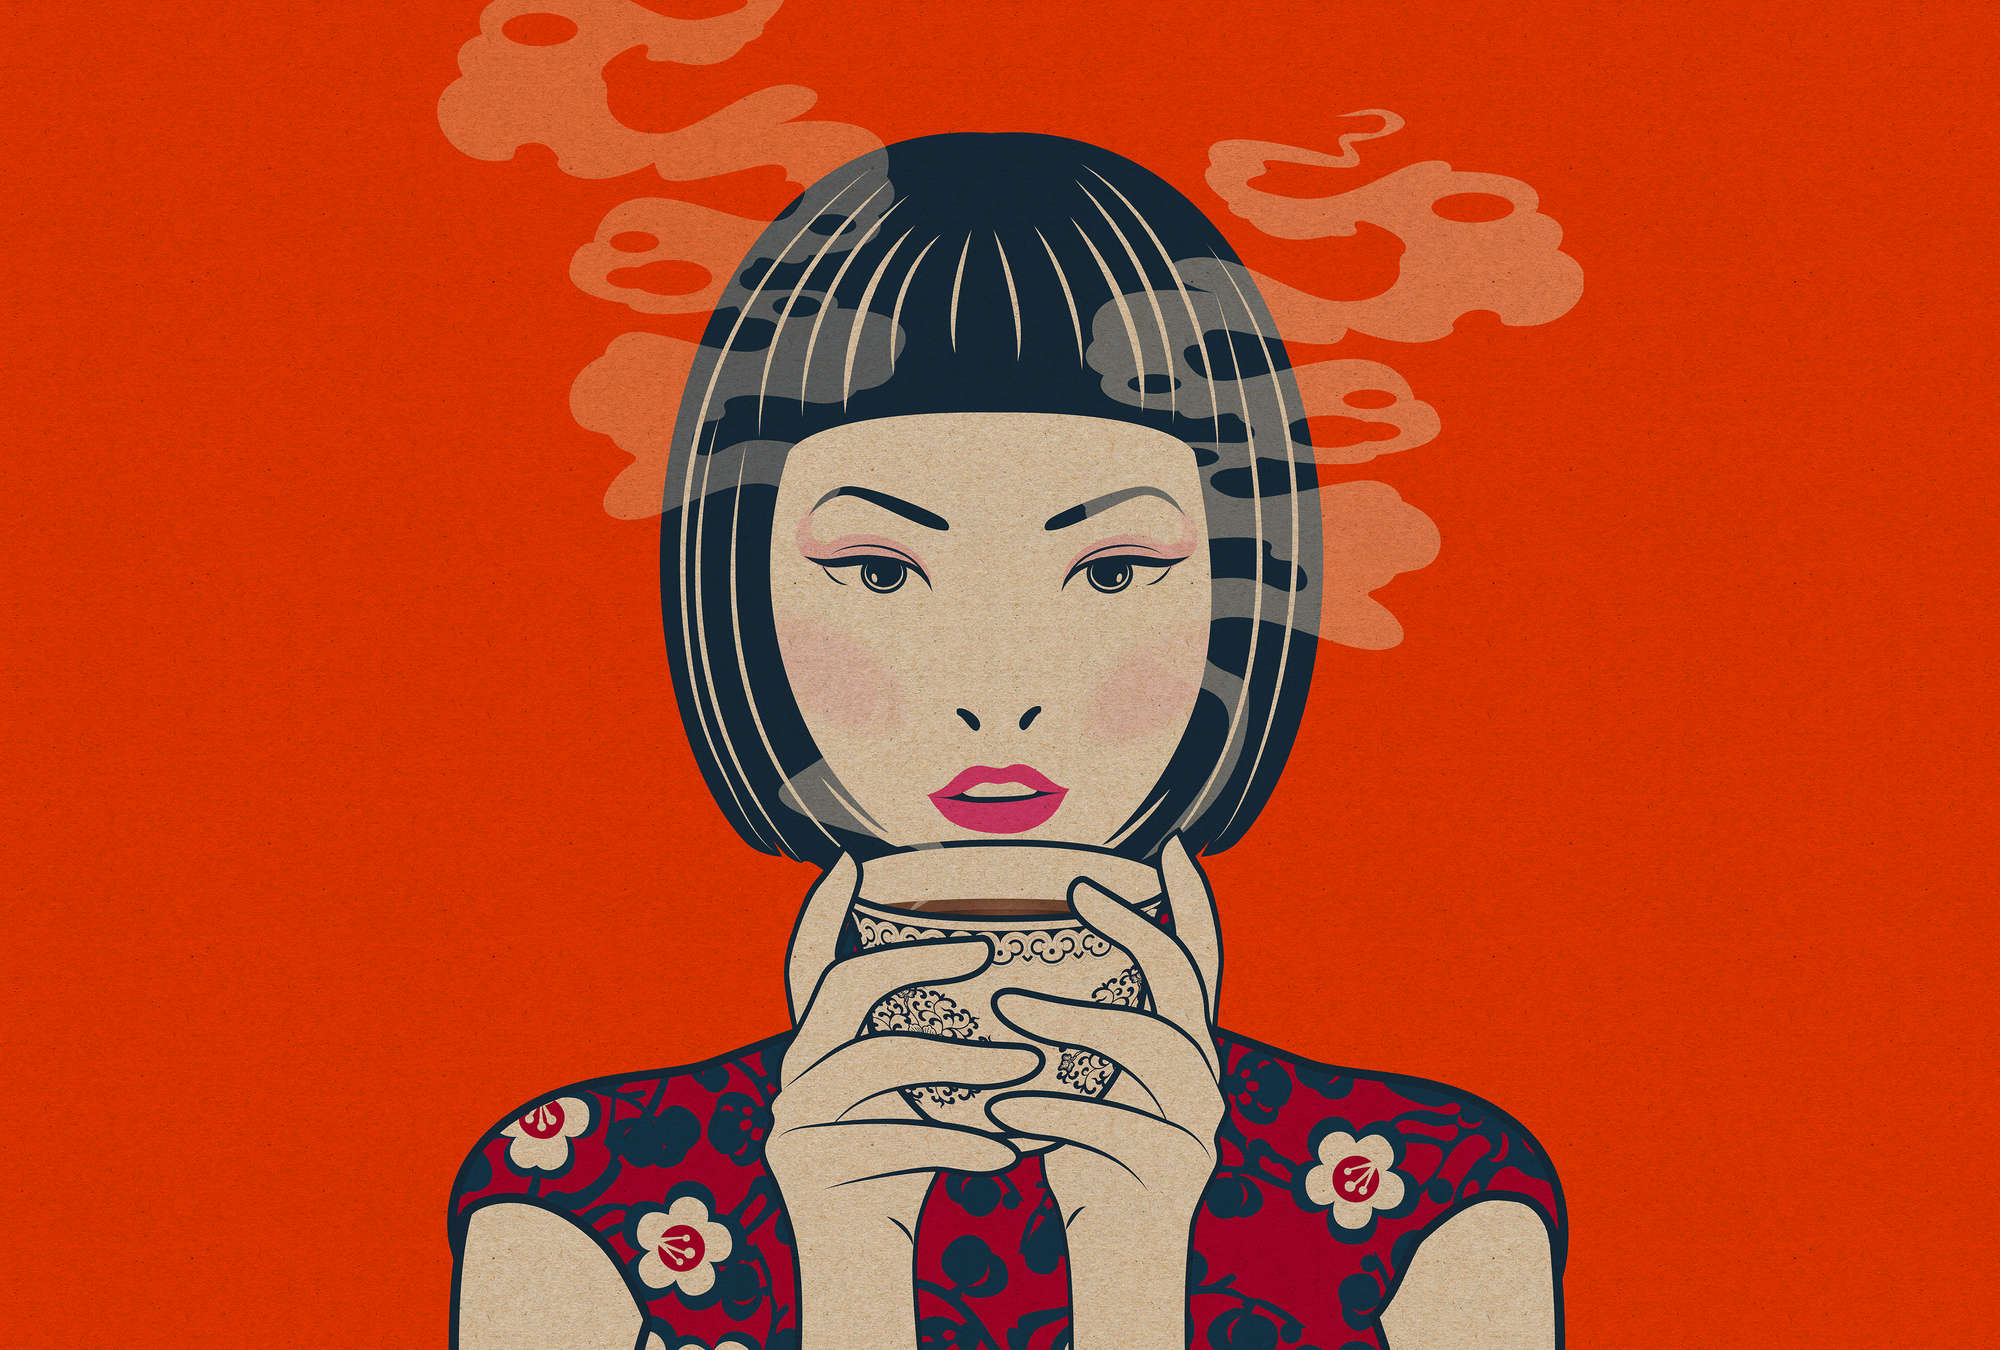             Akari 2 - Time for Tea, Manga Style in Cardboard Texture on Wallpaper - Beige, Orange | Premium Smooth Non-woven
        